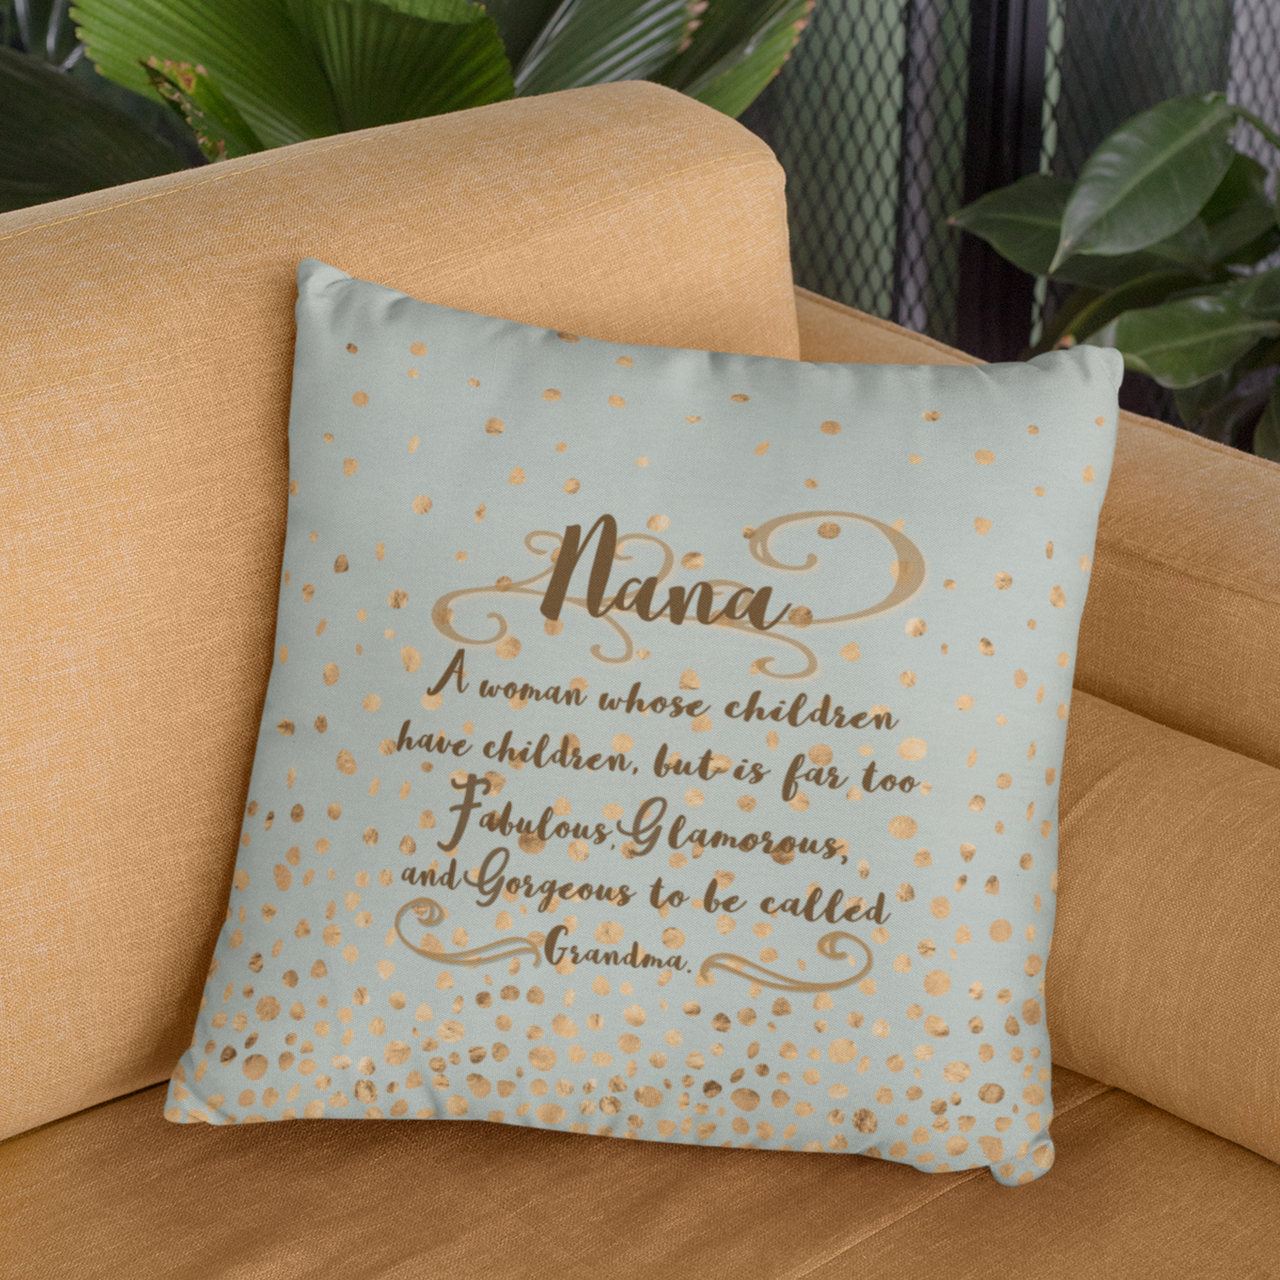 nana pillow gift for nana